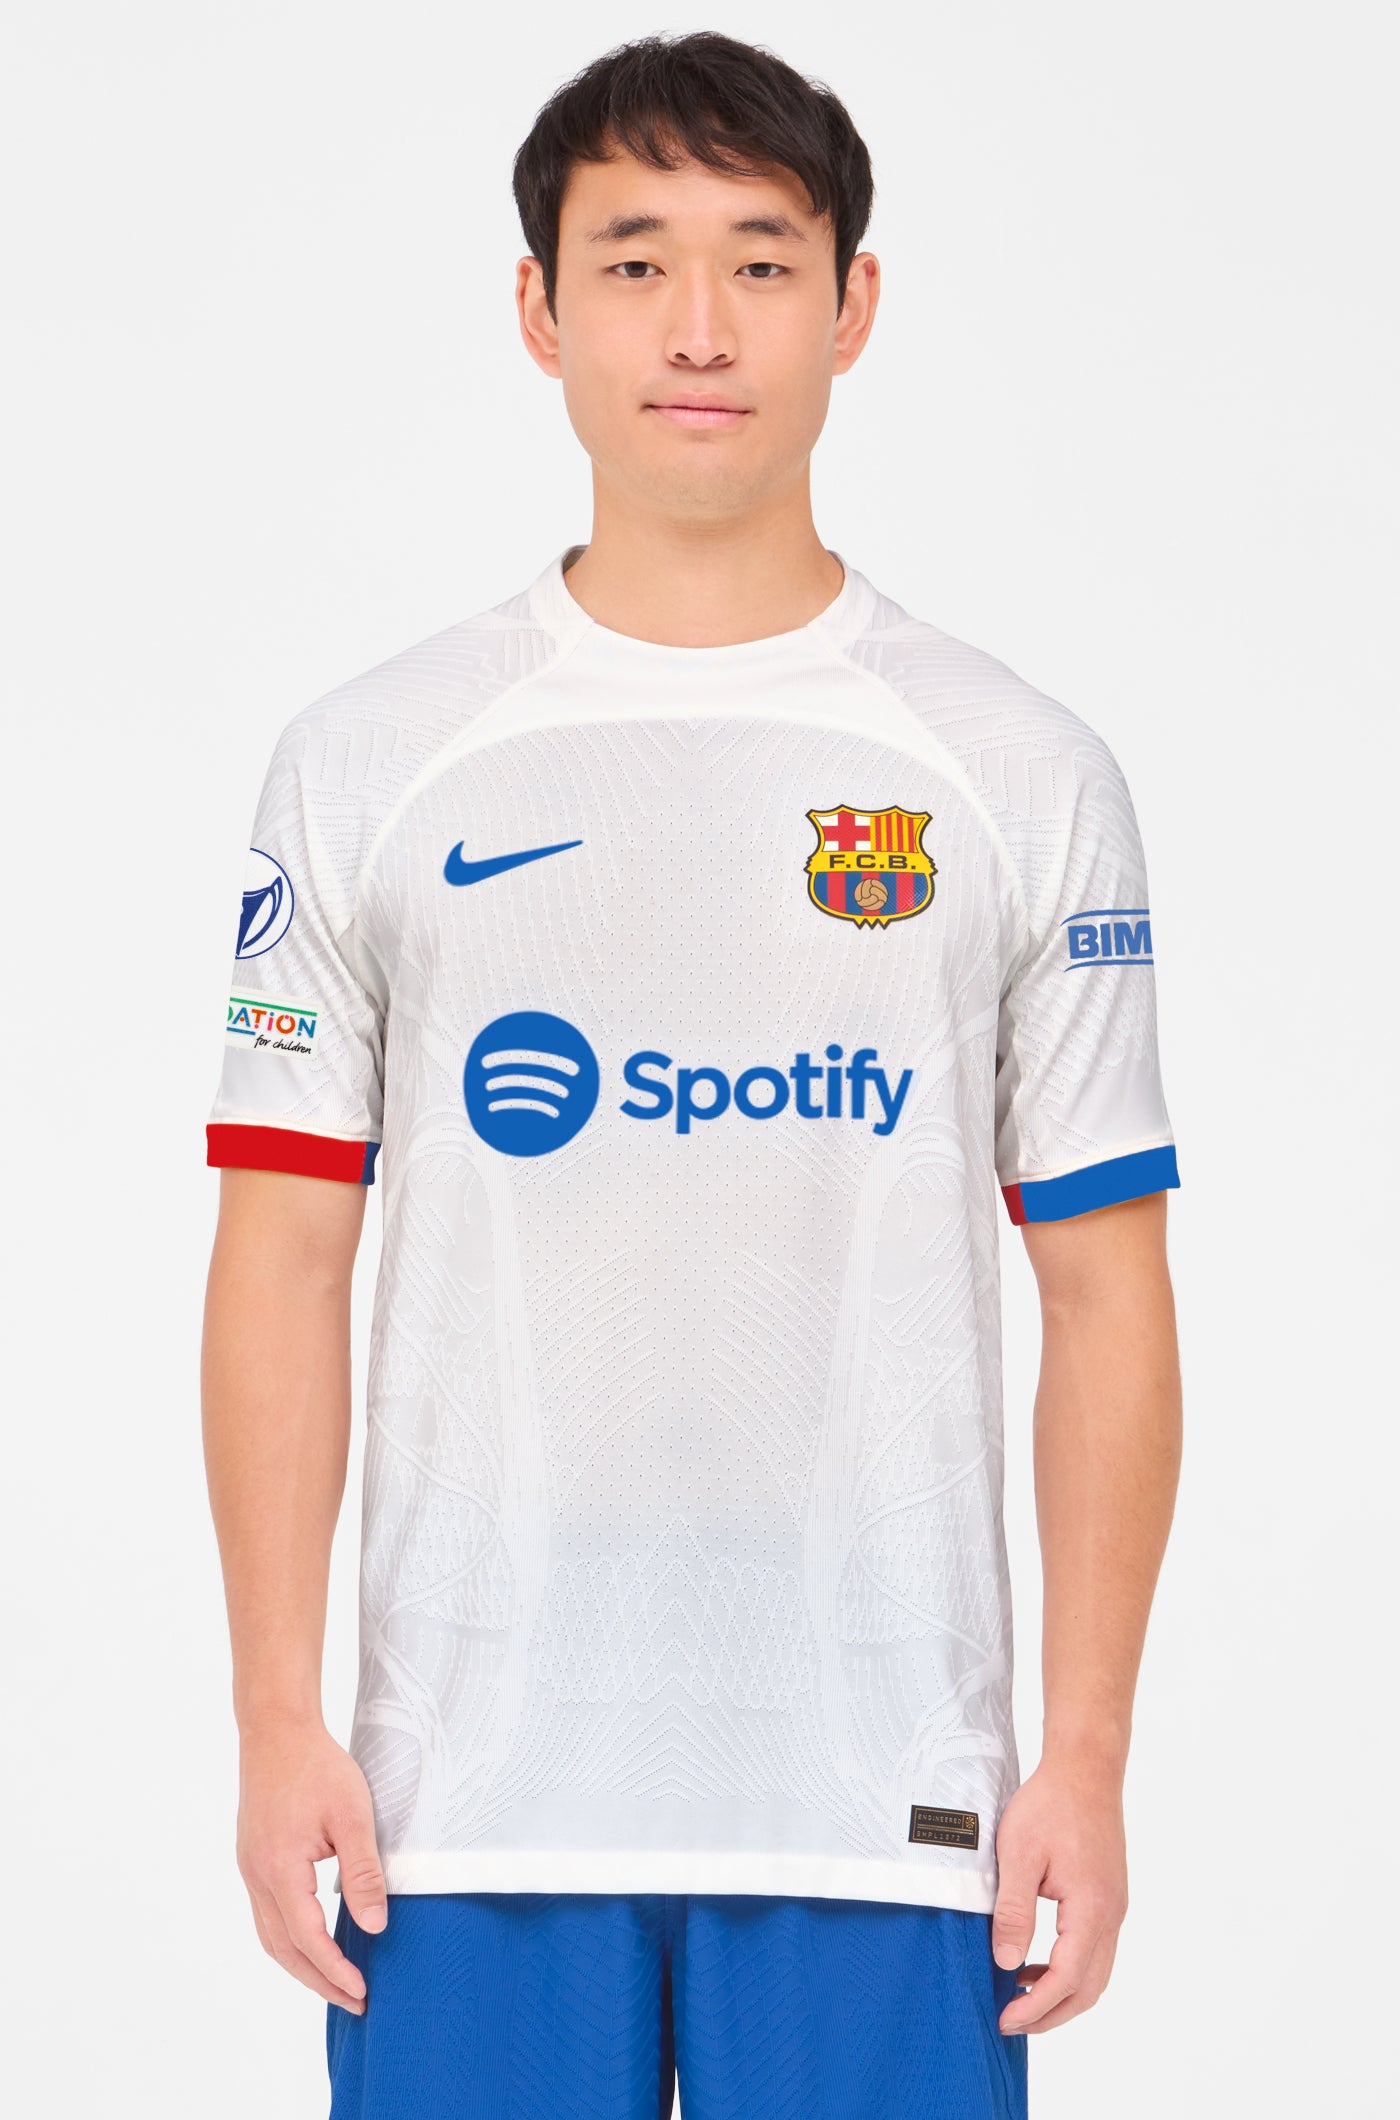 UWCL FC Barcelona away shirt 23/24 Player's Edition